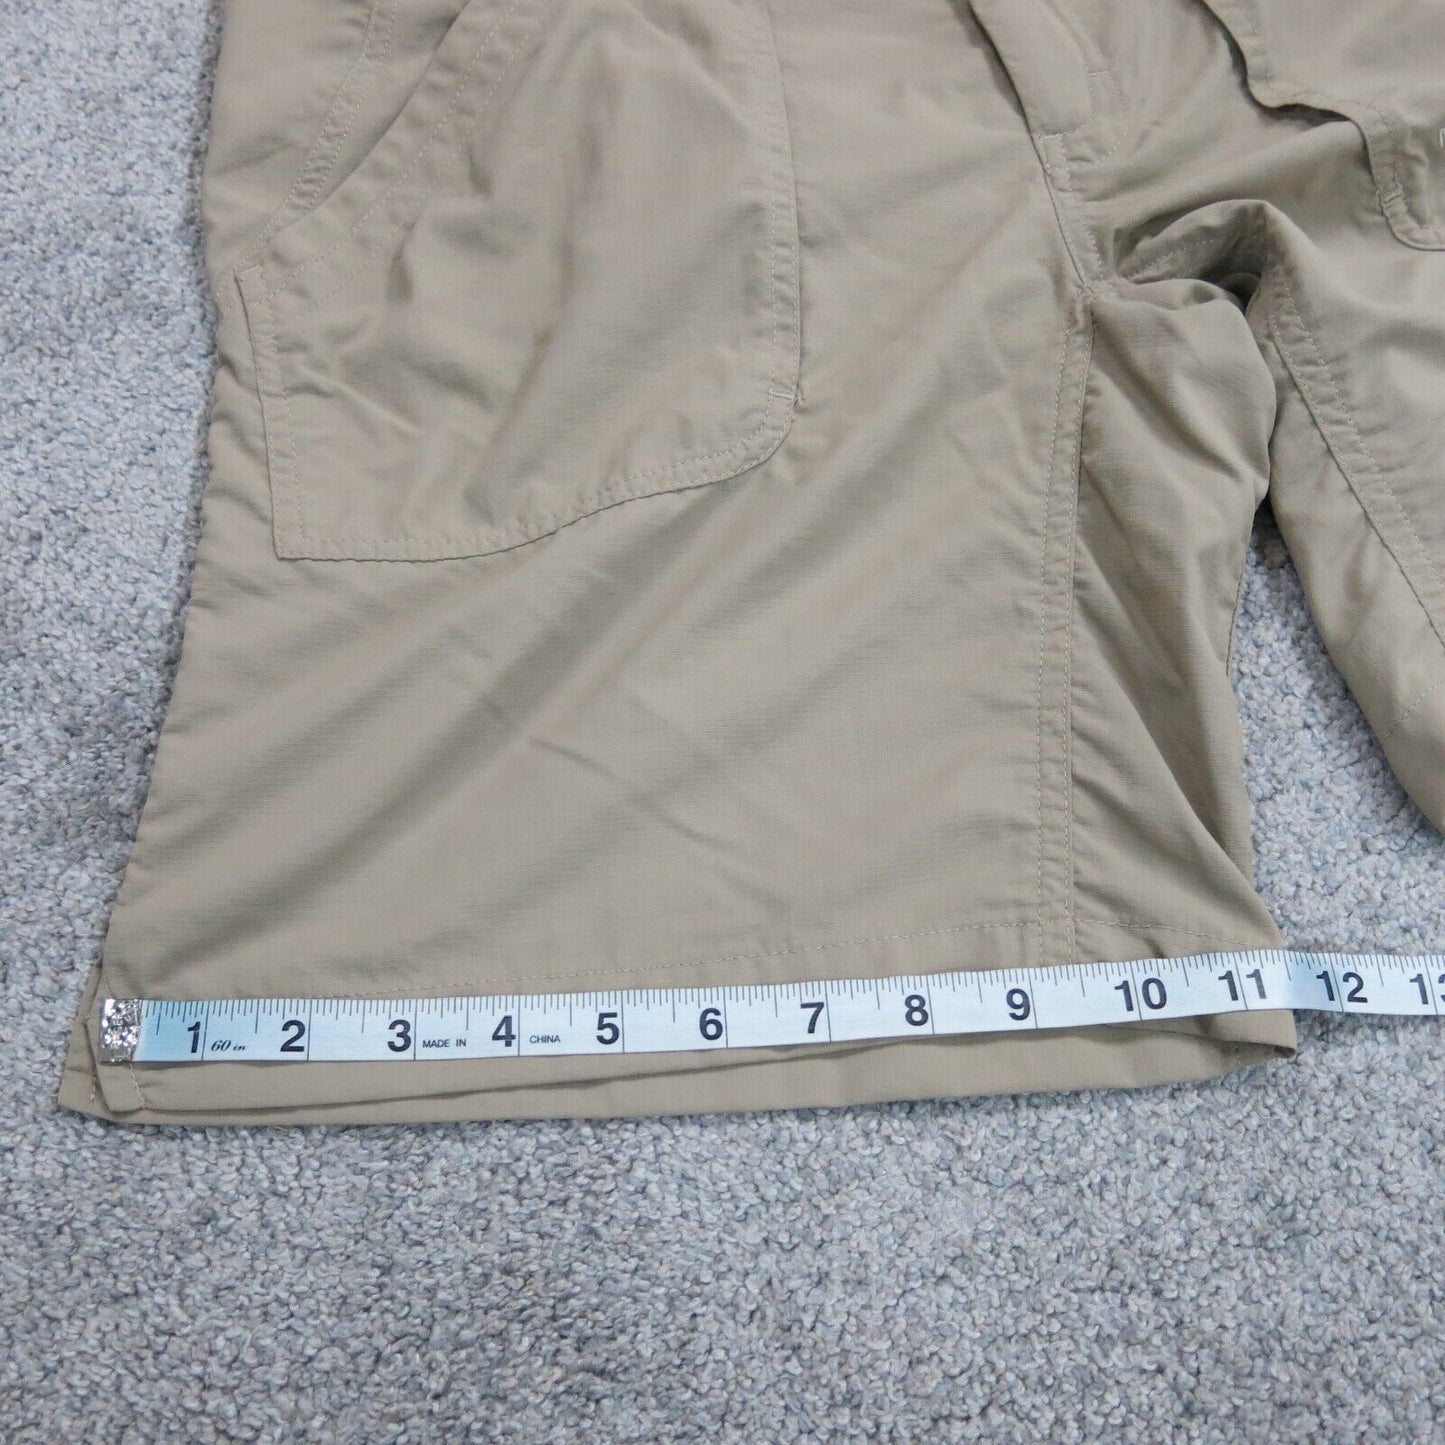 The North Face Mens Chino Shorts Pull on Mid Rise Salish pockets Khaki Size 12